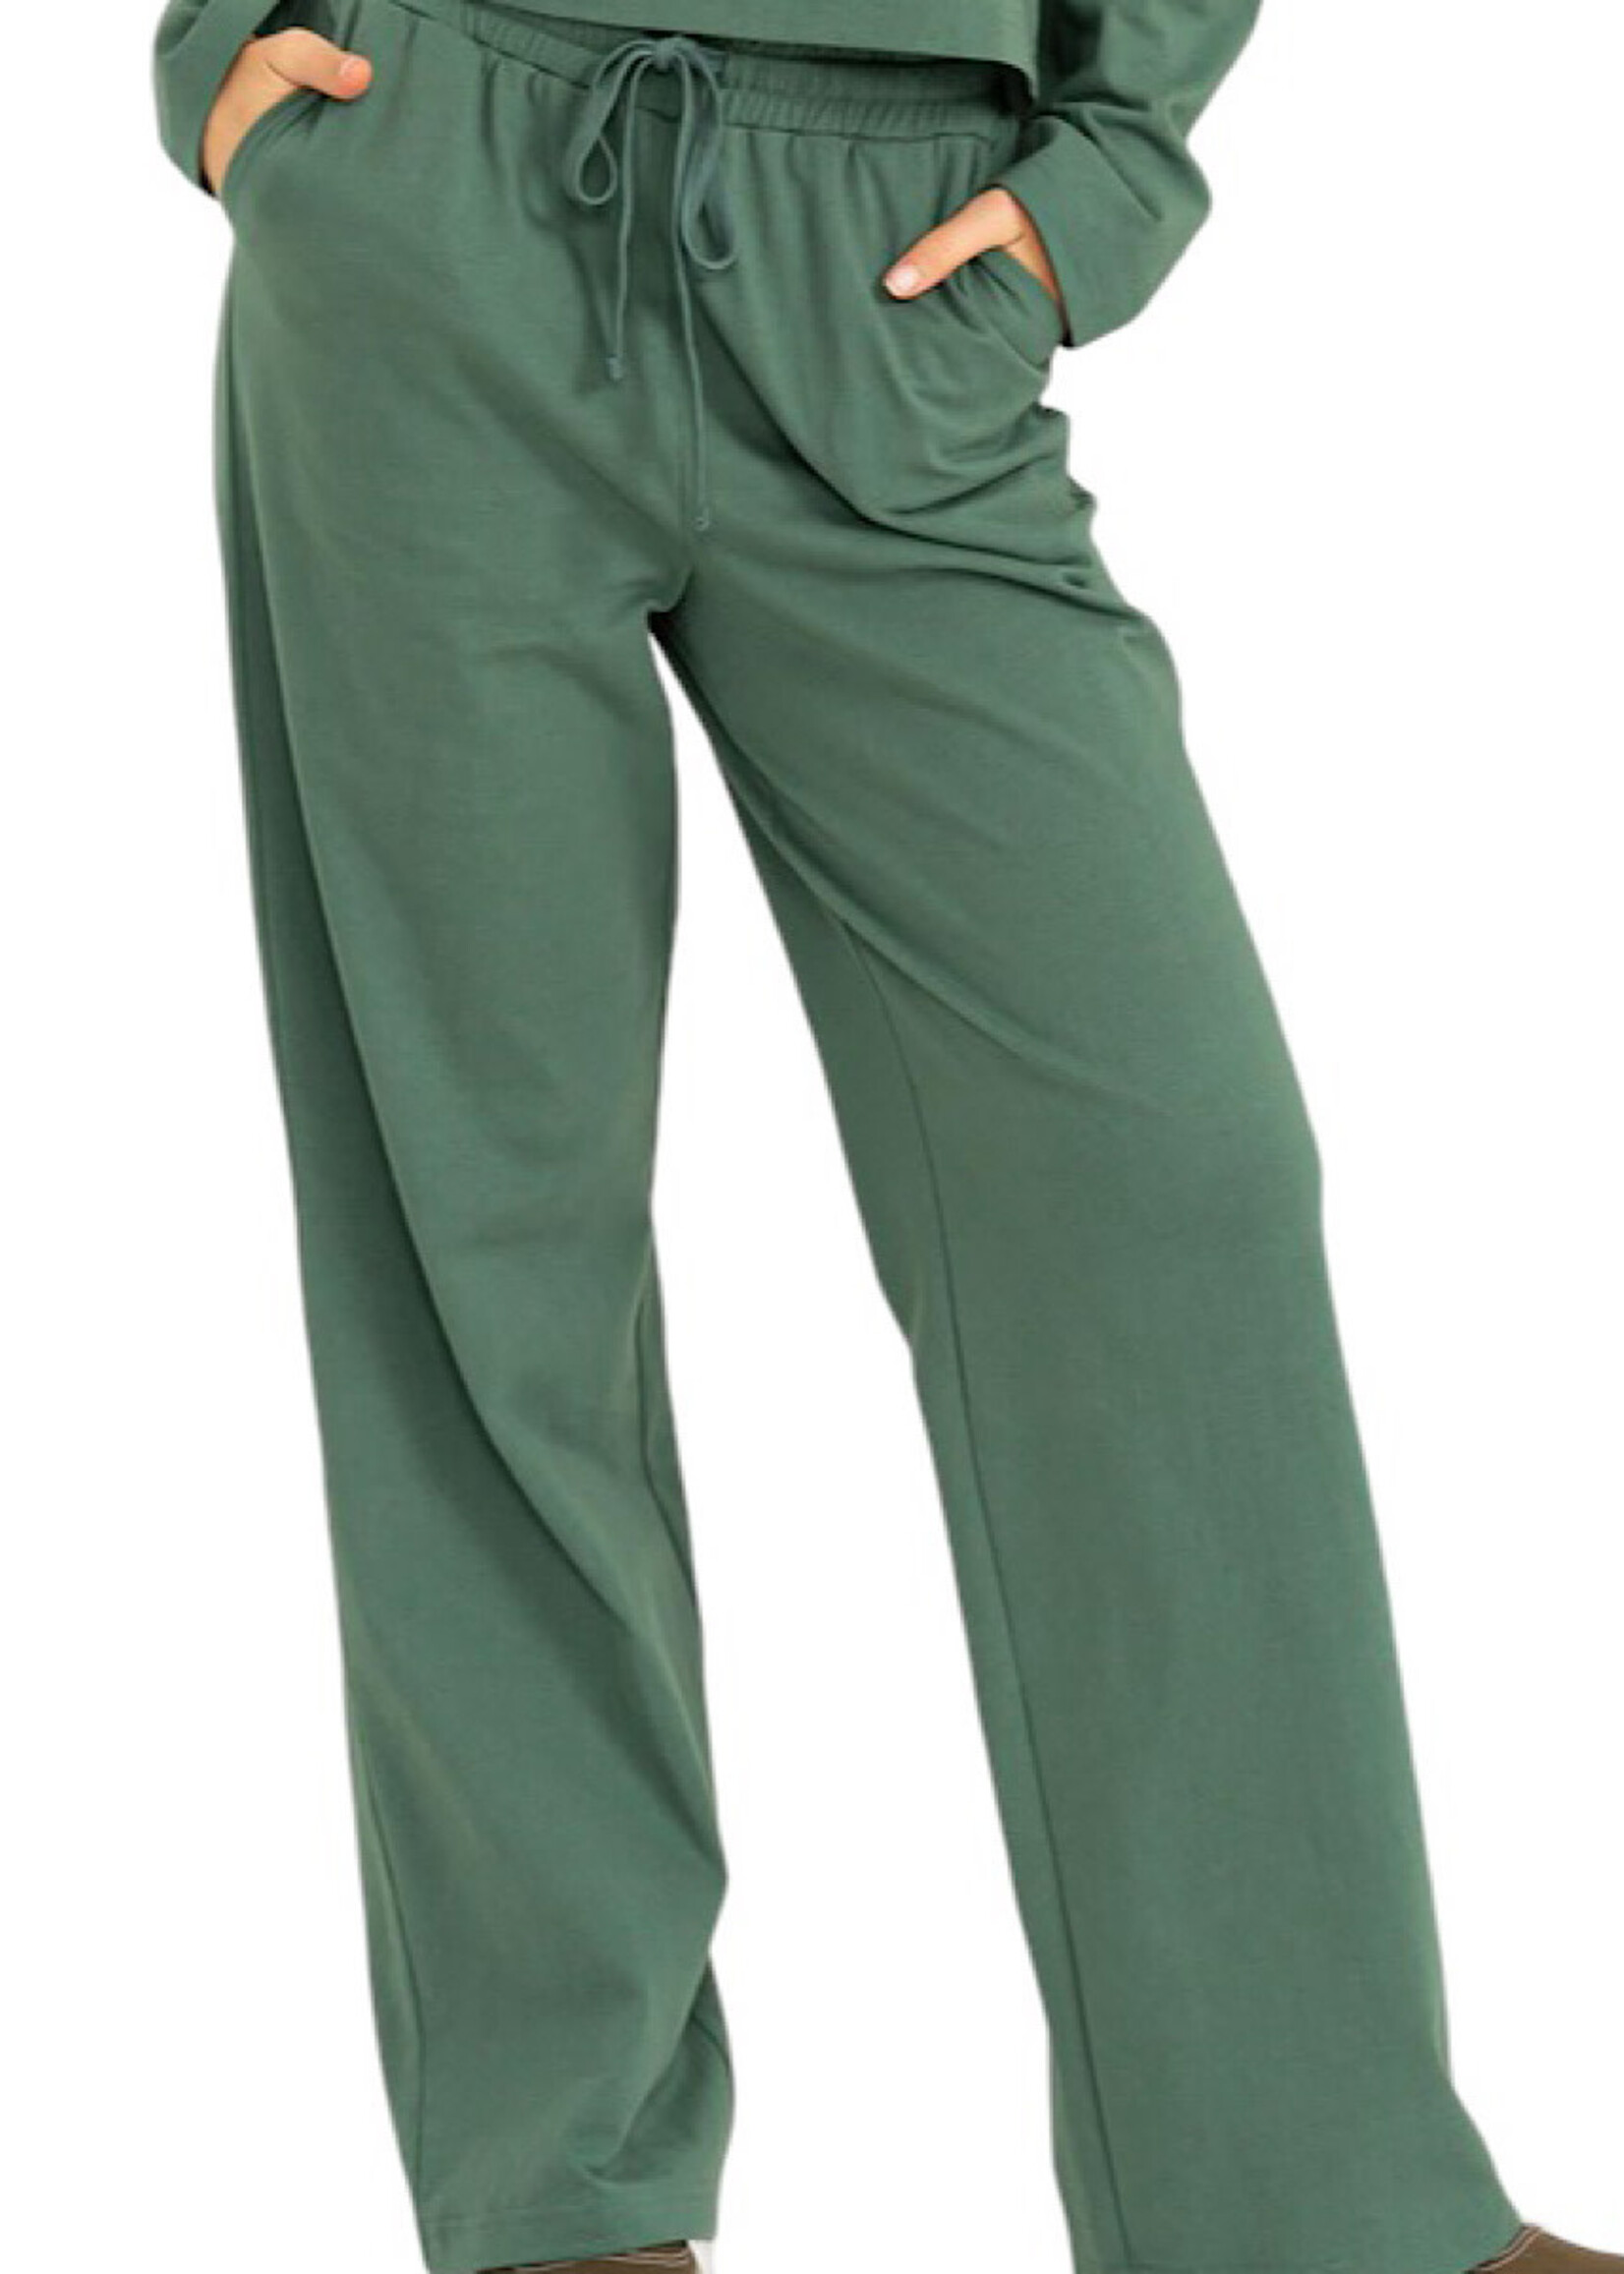 Green High Waist Drawstring Pants